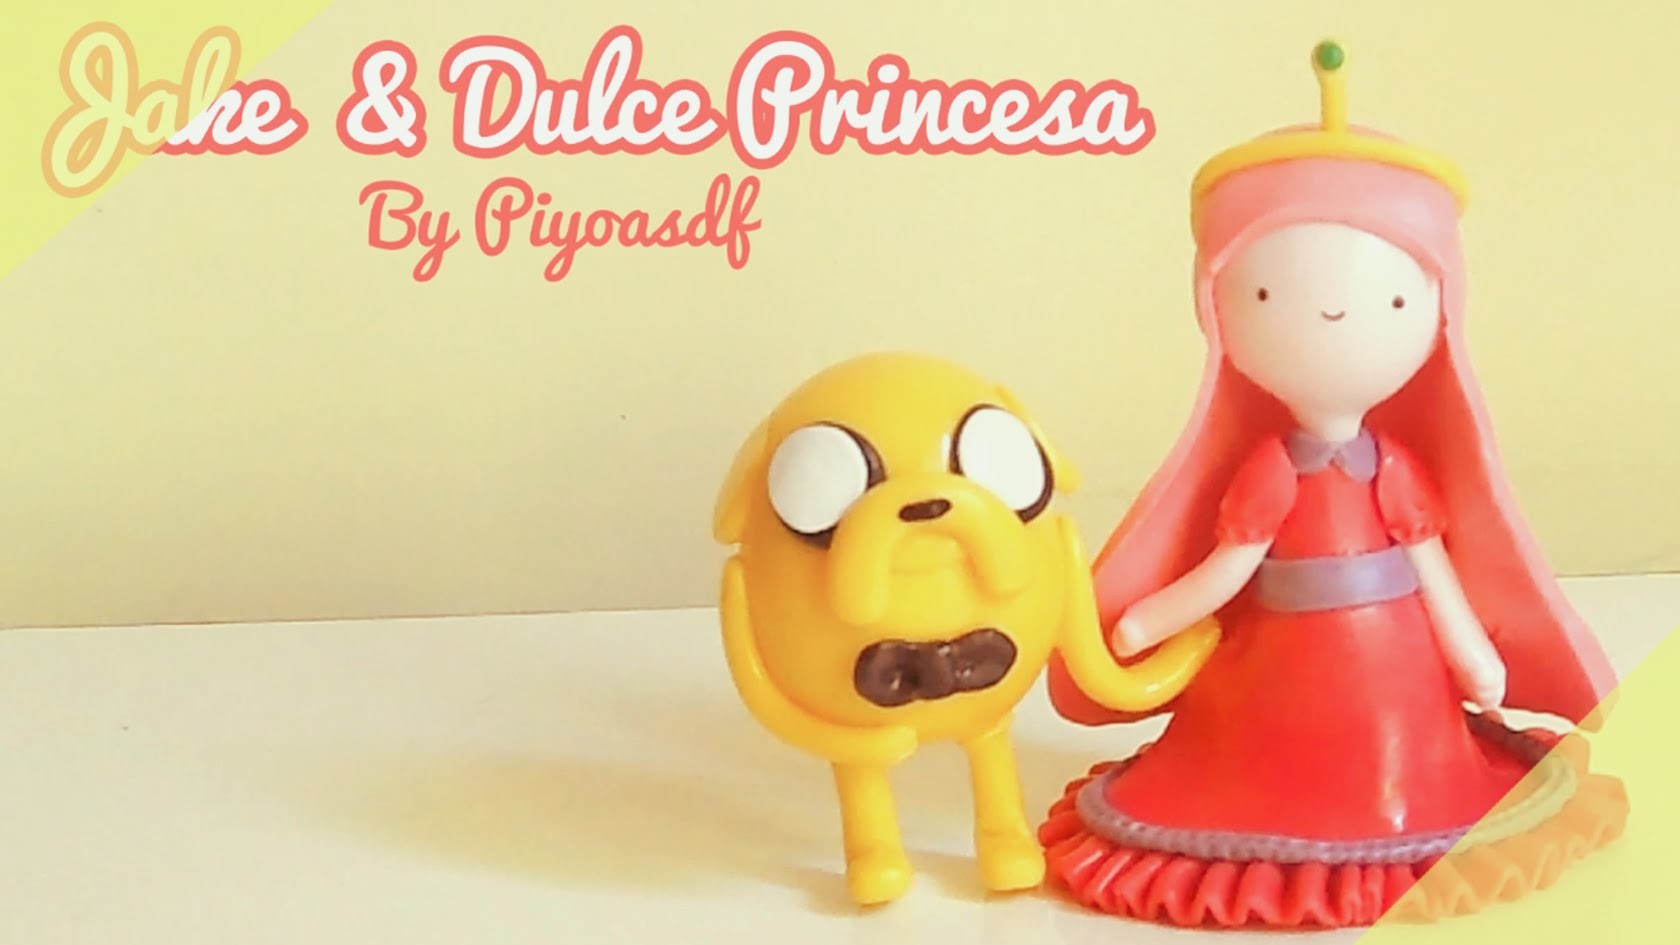 ♡ Jake & Dulce princesa ♡ Tutorial porcelana en frío By Piyoasdf